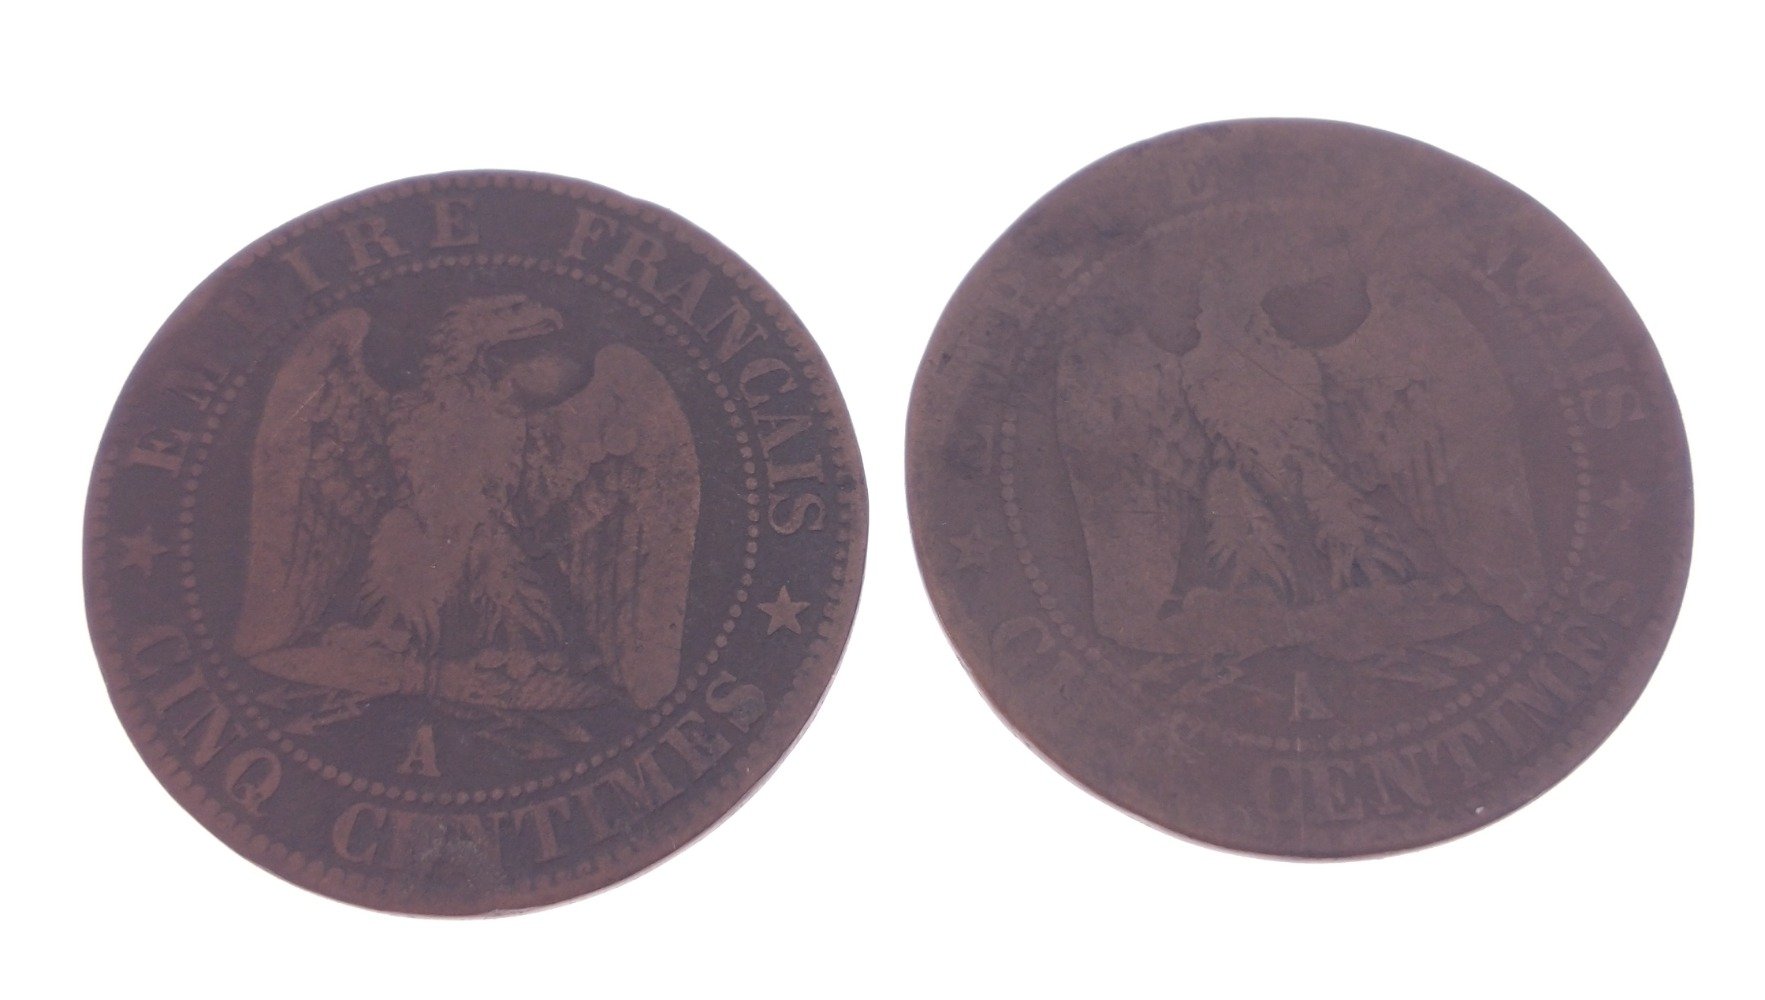 Two 1855 5 Centimes Napoleon III (1808-1873), Empereur de France (1852-1870) coins, bronze, - Image 4 of 4